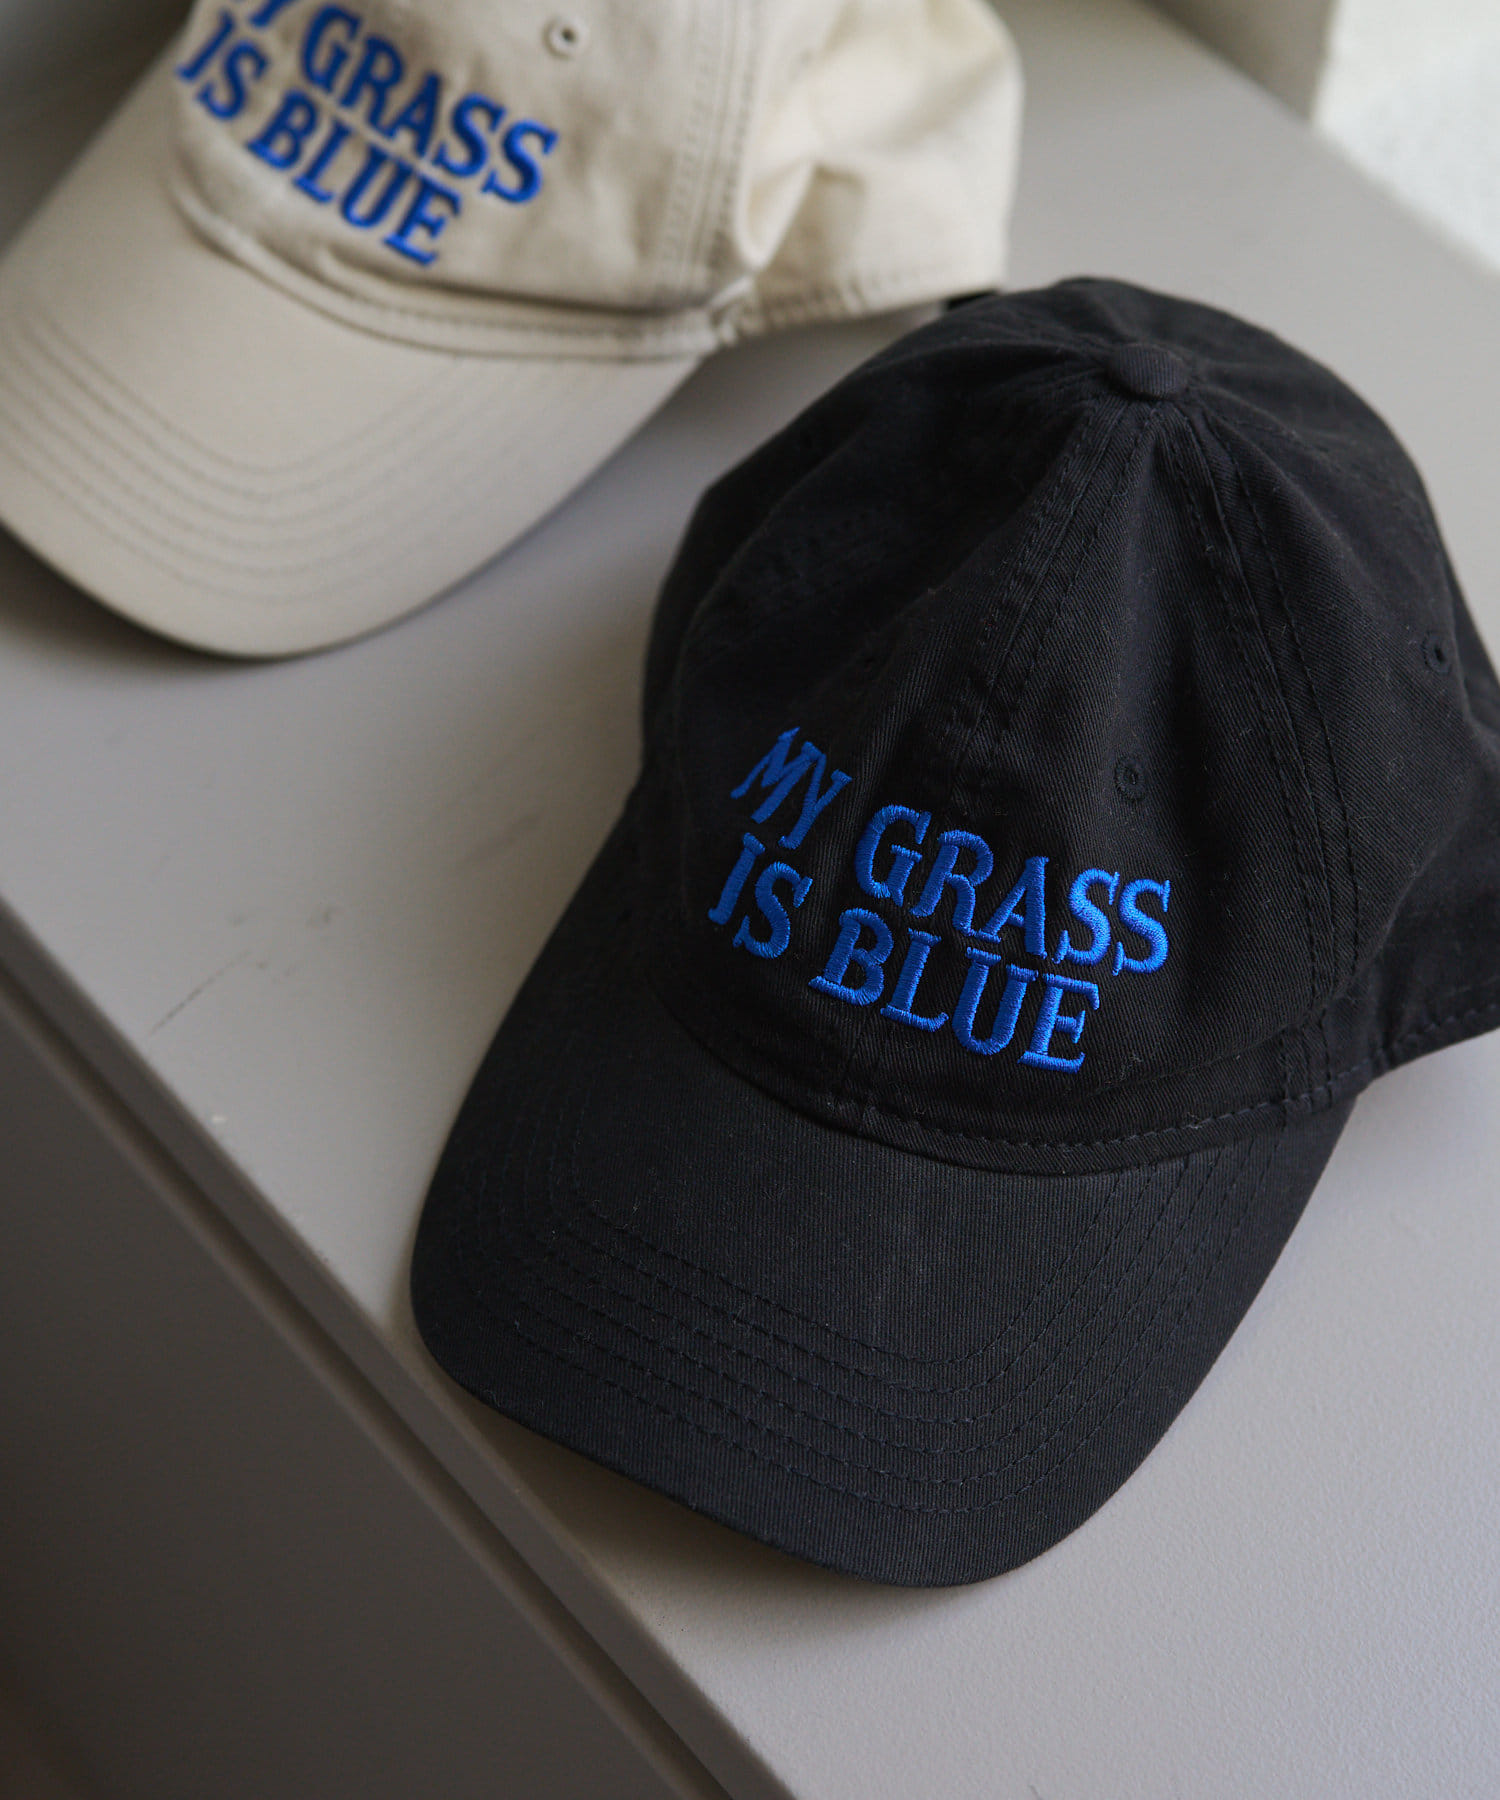 Omekashi(オメカシ) MY GRASS IS BLUE CAP